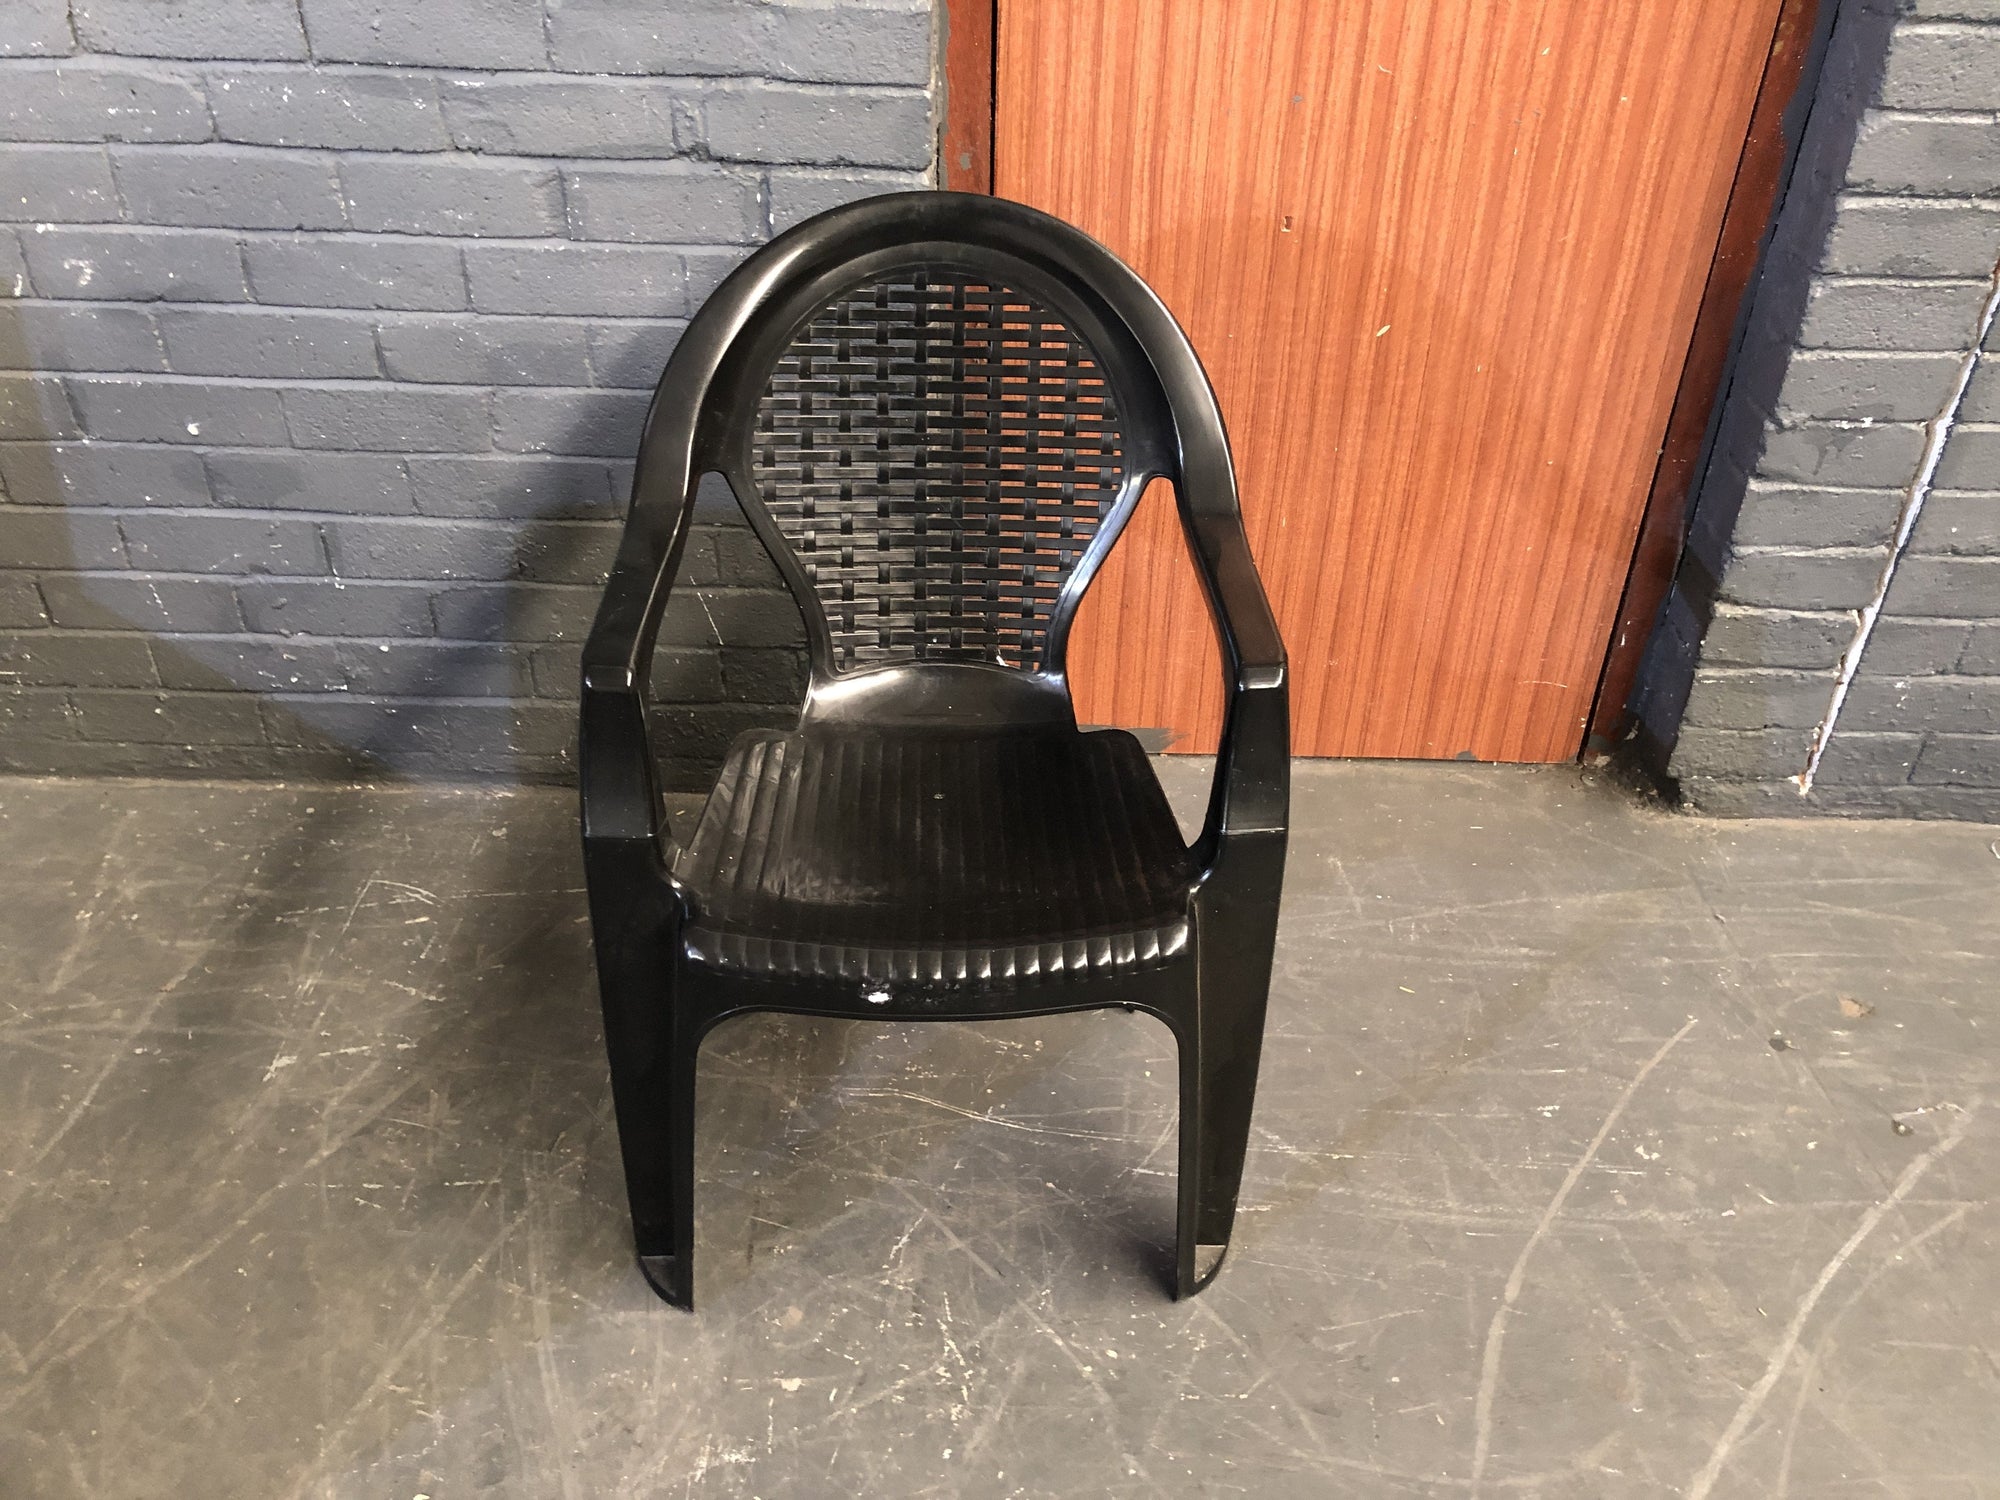 Black Plastic Garden Chair - 2ndhandwarehouse.com